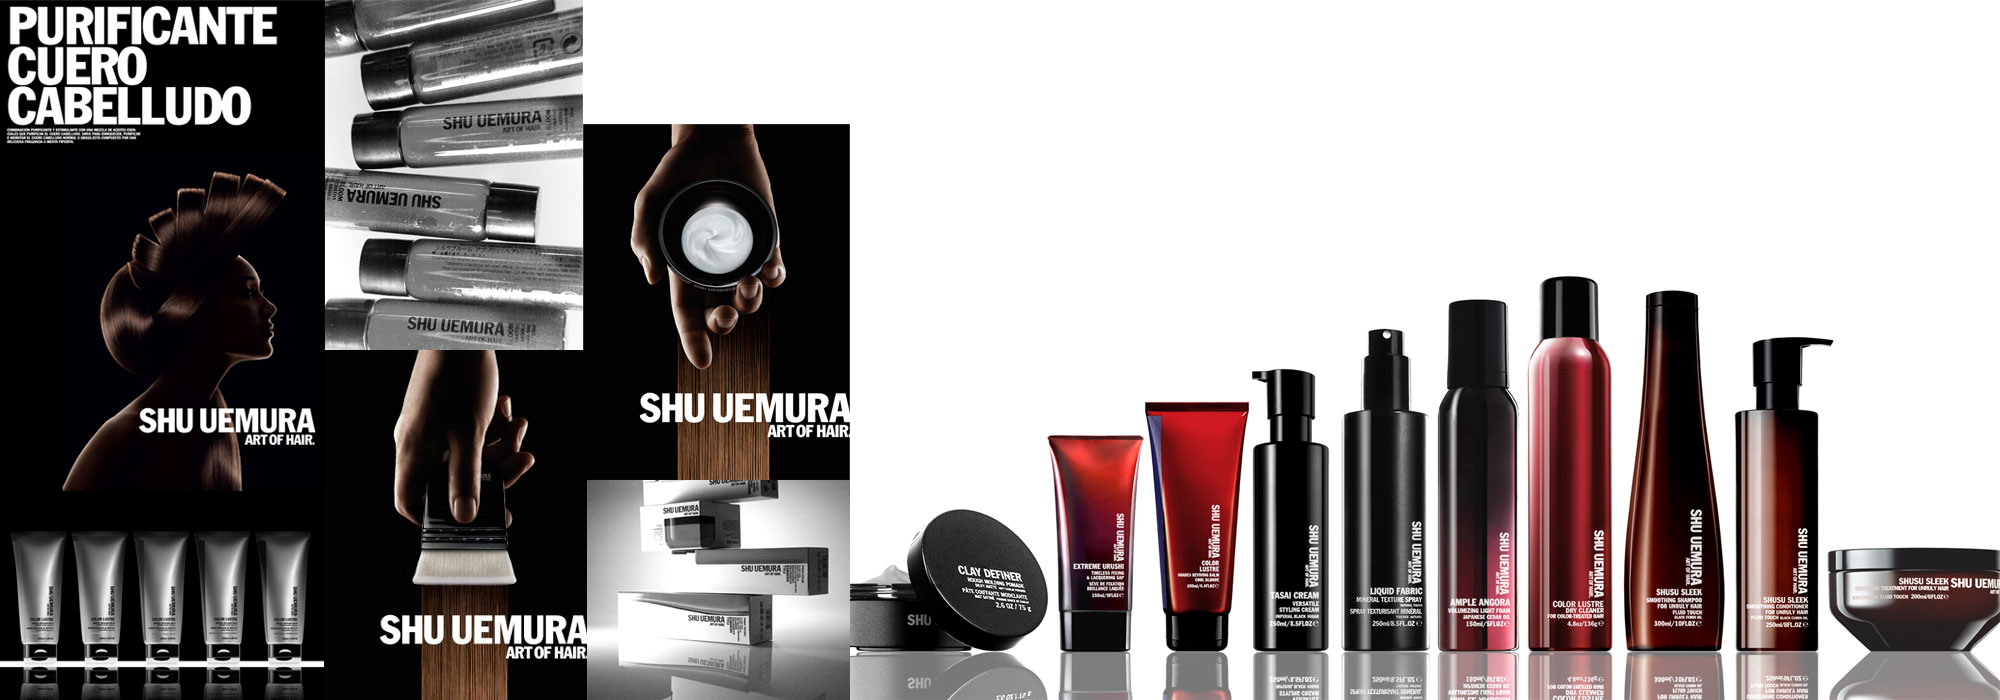 Shu Uemura art of hair brand and packaging designed by MPAKT